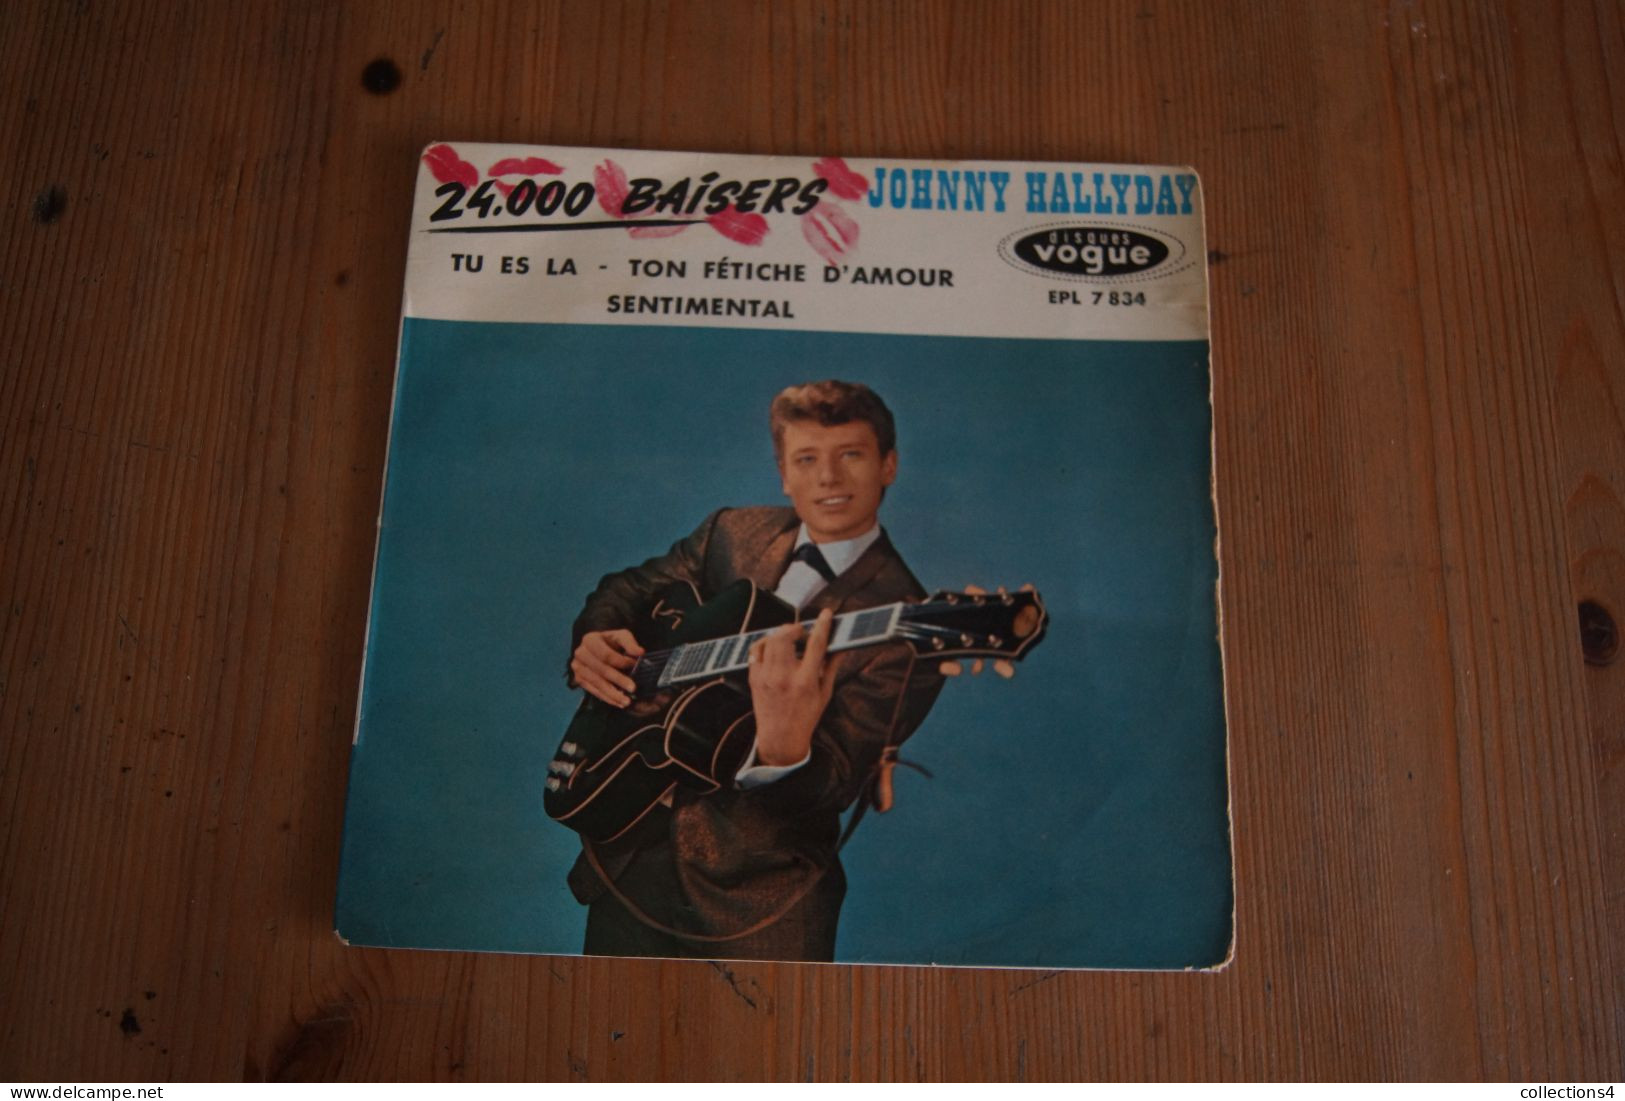 JOHNNY HALLYDAY 24 000 BAISERS  EP   1961 LANGUETTE VALEUR+ - 45 Rpm - Maxi-Singles